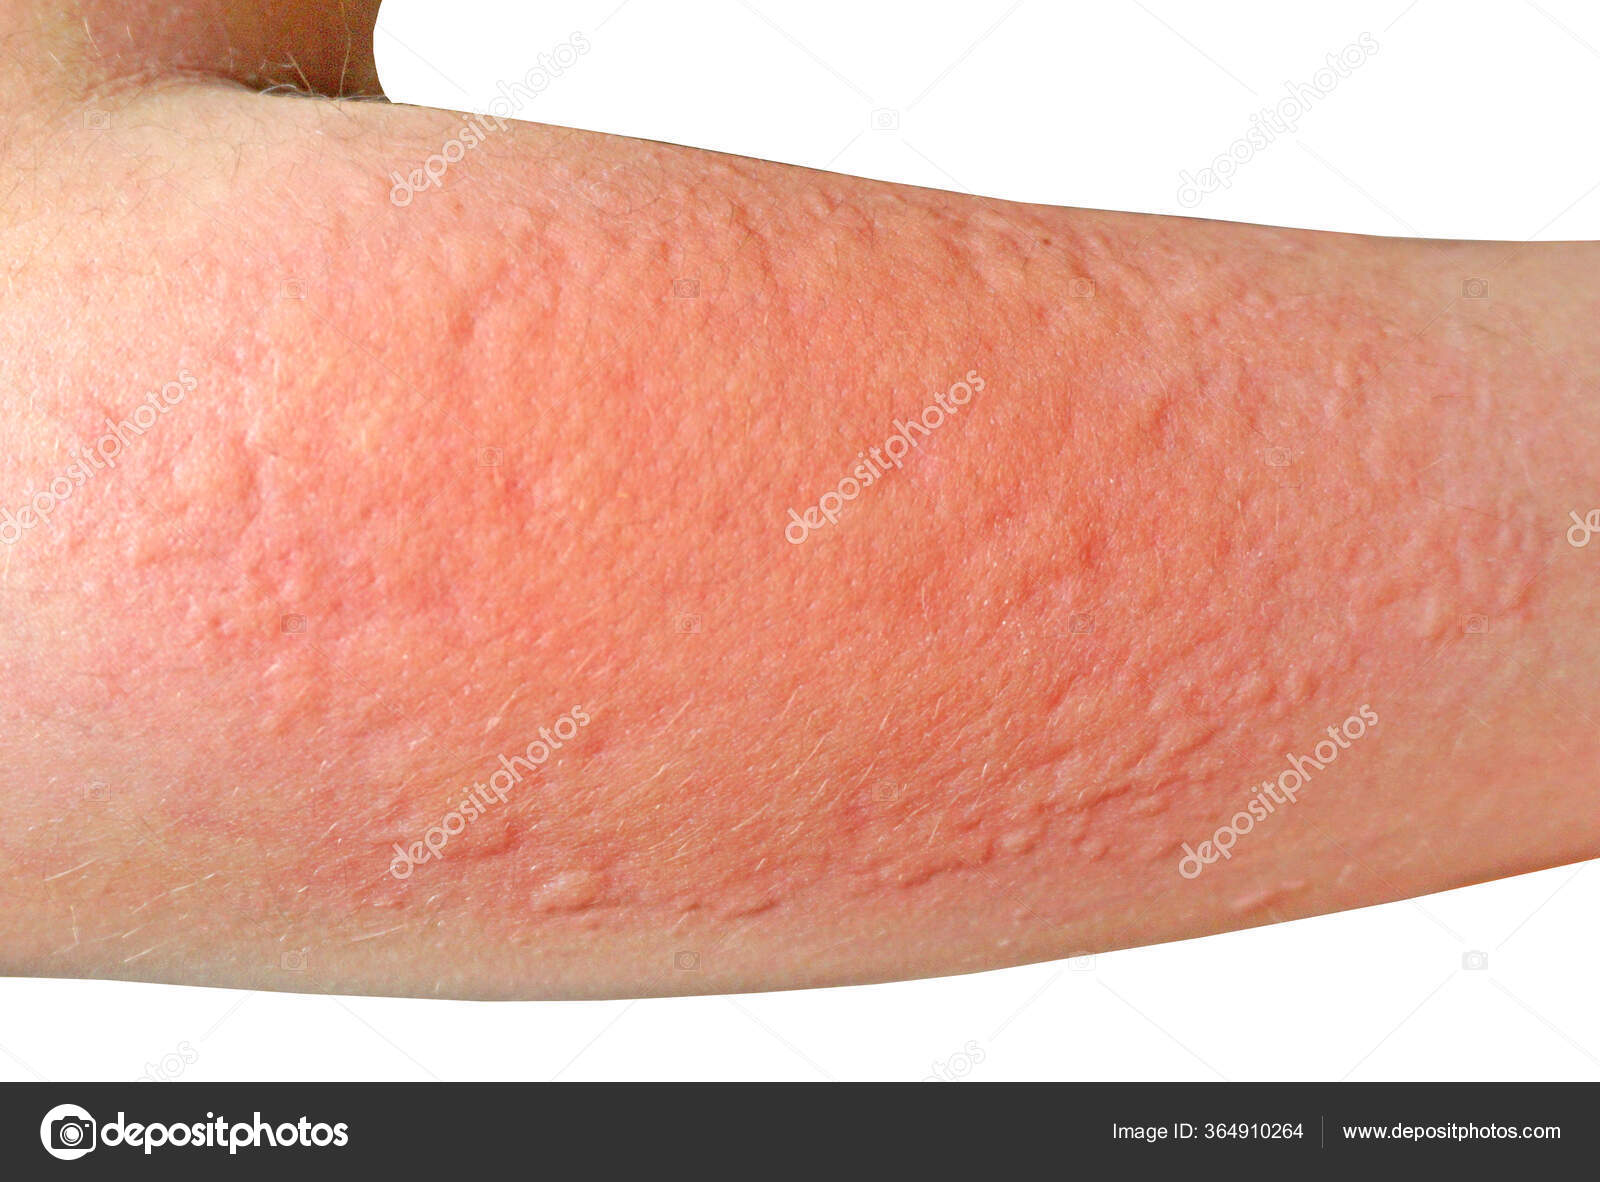 Skin Rashes Allergies Contact Dermatitis Allergic Chemicals Fungal